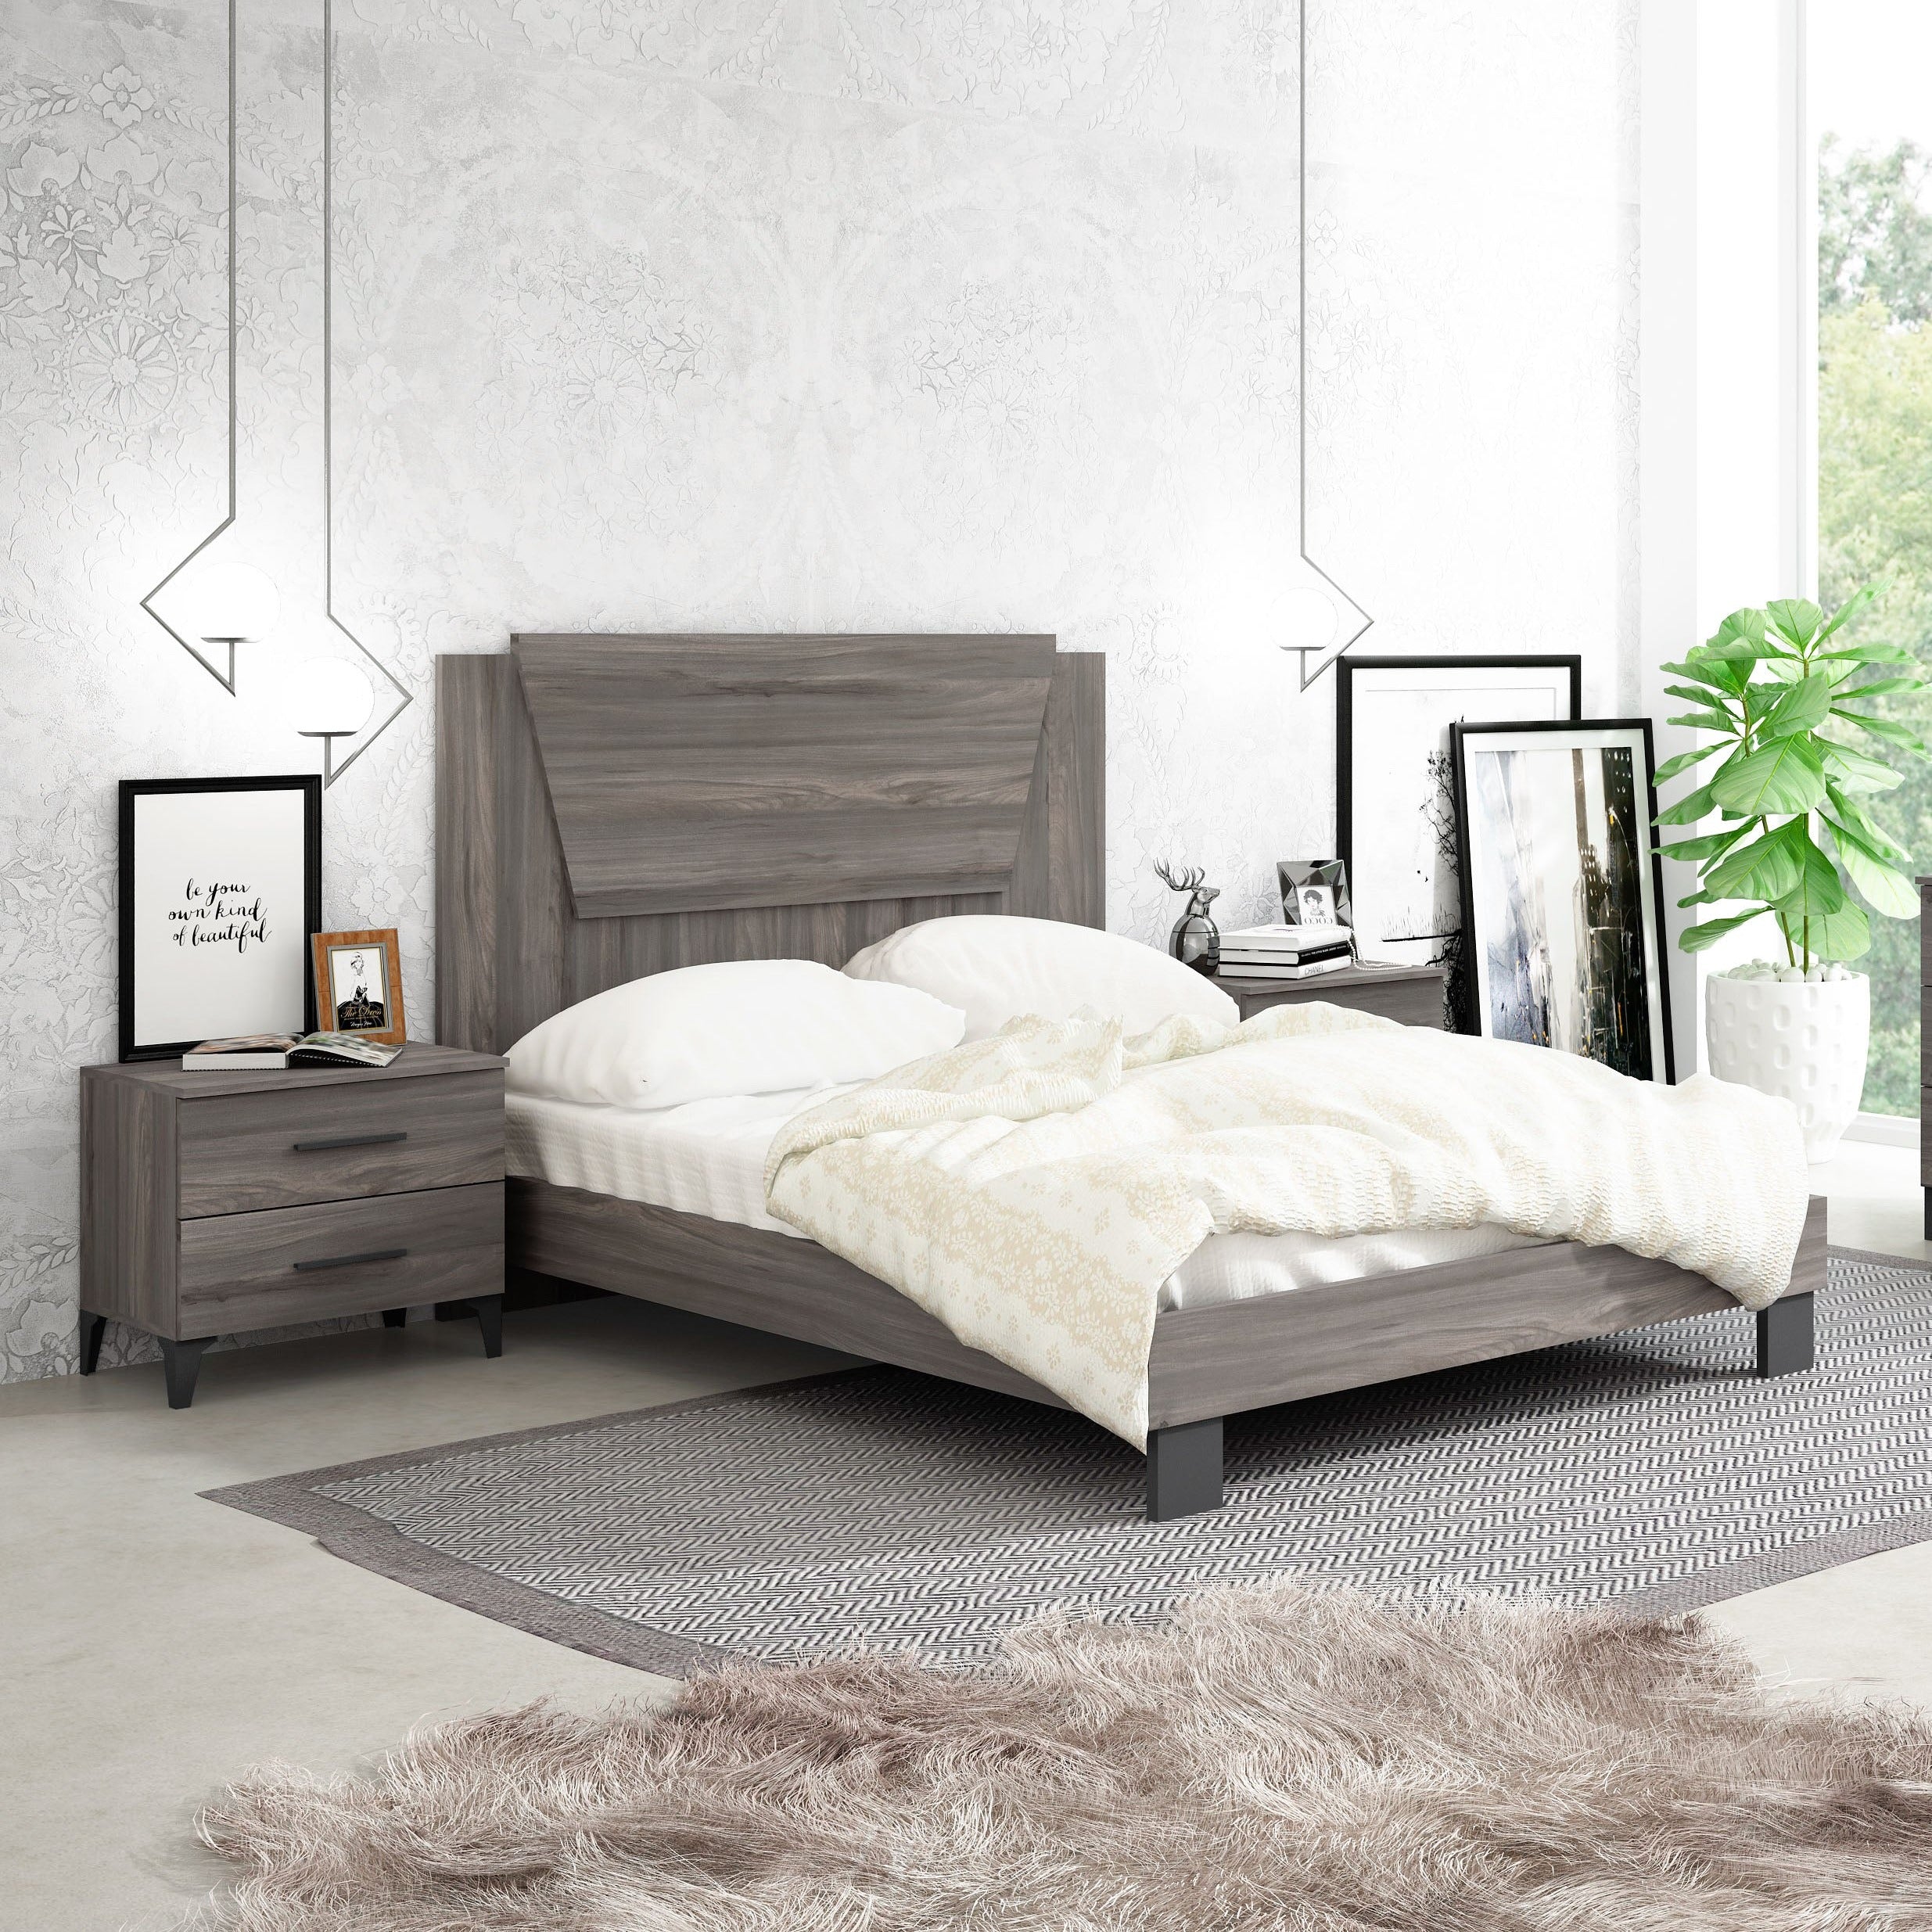 OLMO - Full Bedroom+Dresser+Mirror+Nightstand